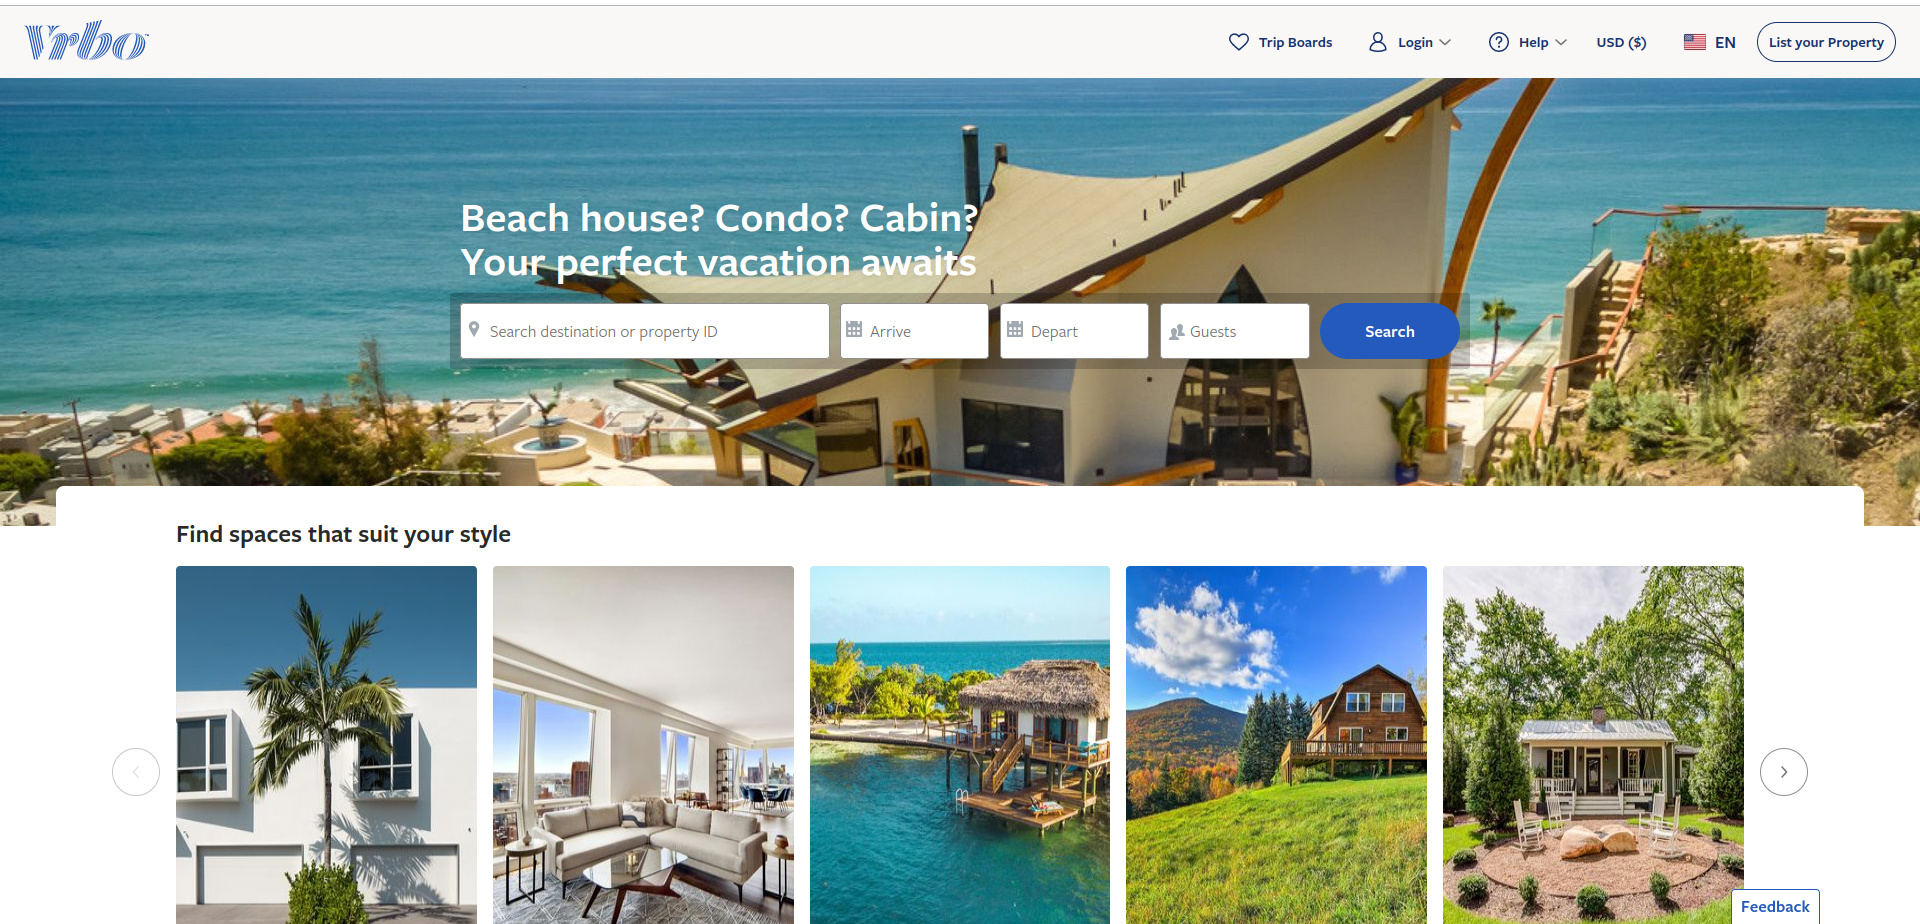 VRBO主页的屏幕截图 -  Airbnb竞争对手